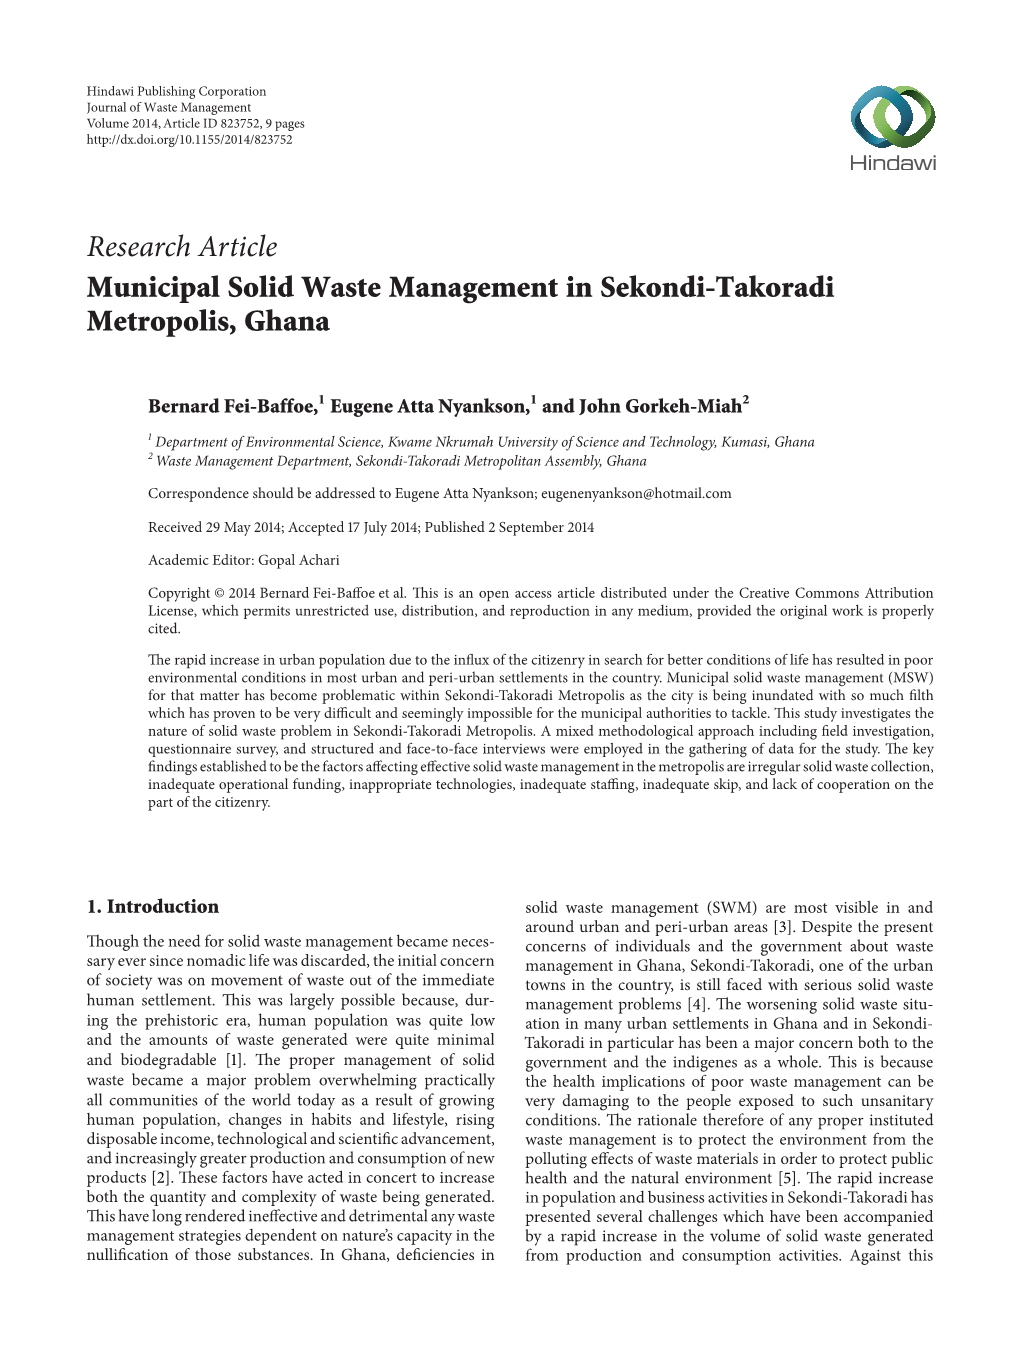 Municipal Solid Waste Management in Sekondi-Takoradi Metropolis, Ghana